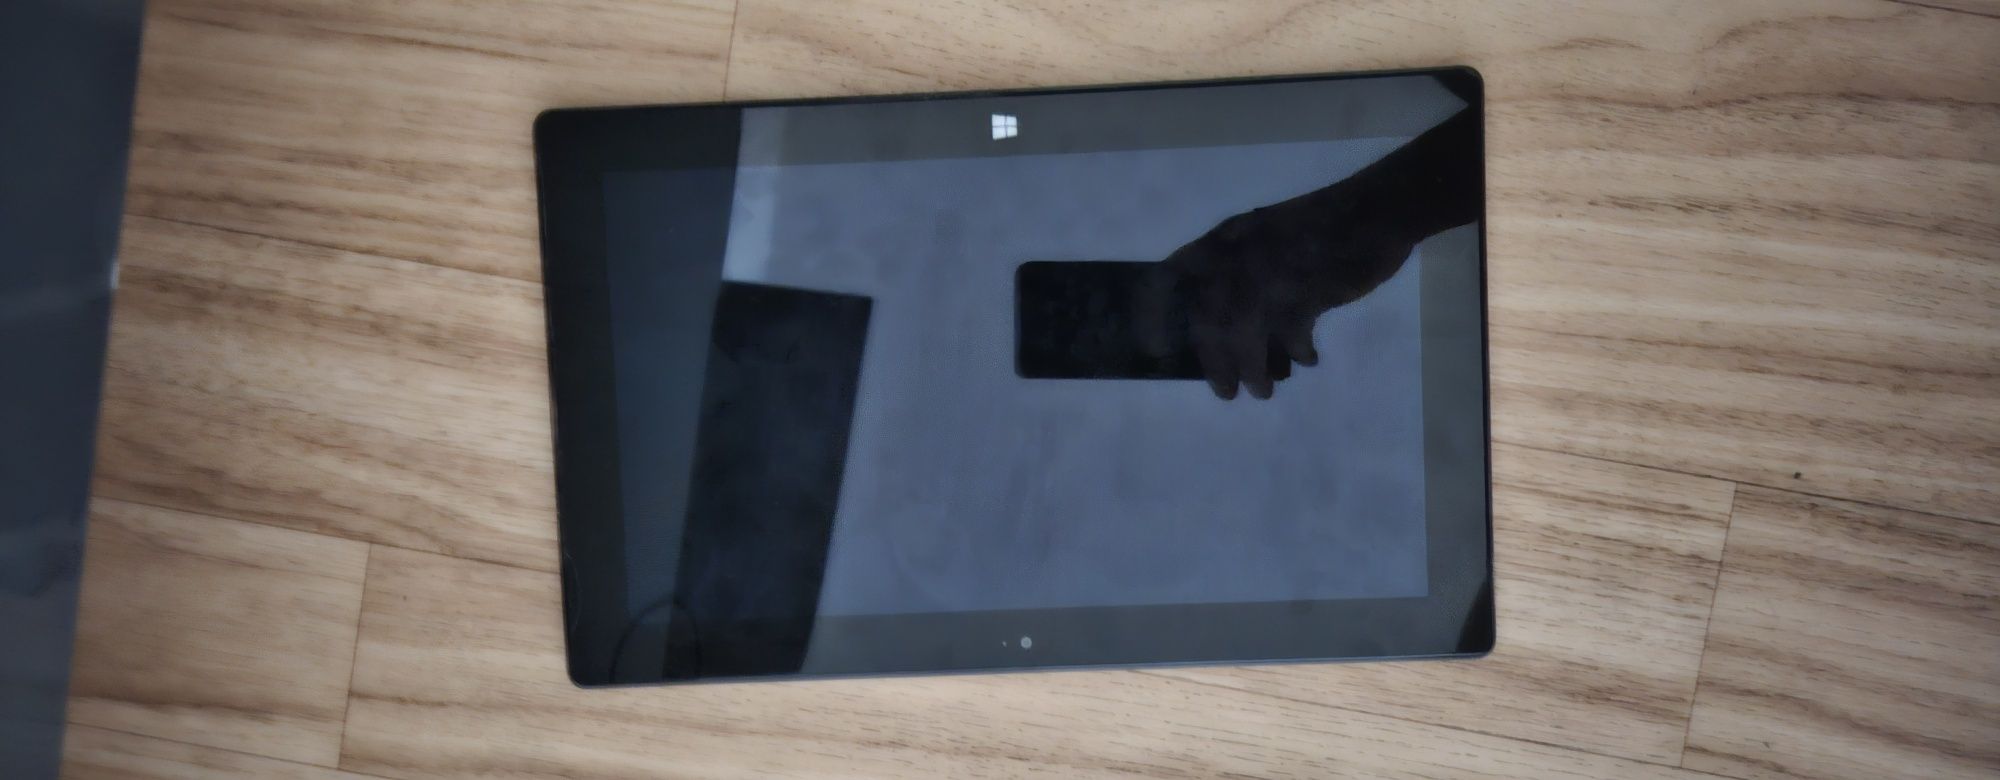 Tablet Surface RT odblokowany